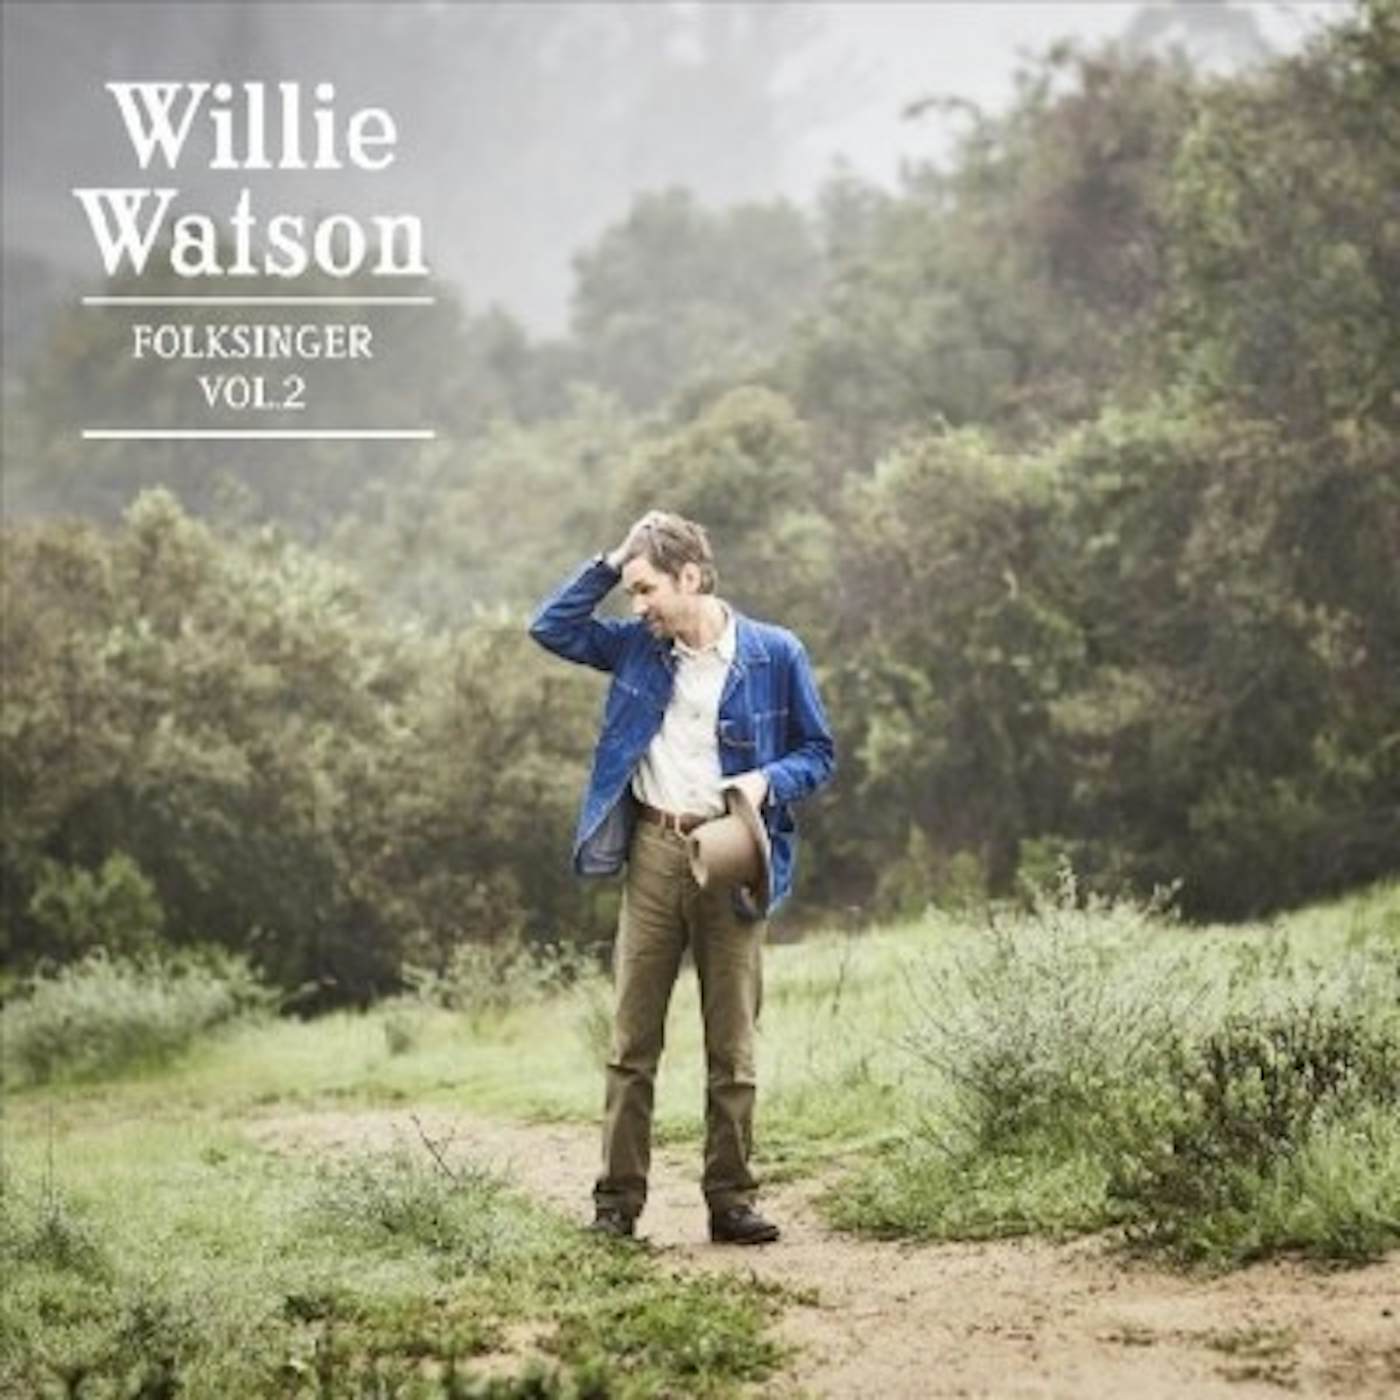 Willie Watson FOLKSINGER VOL 2 Vinyl Record